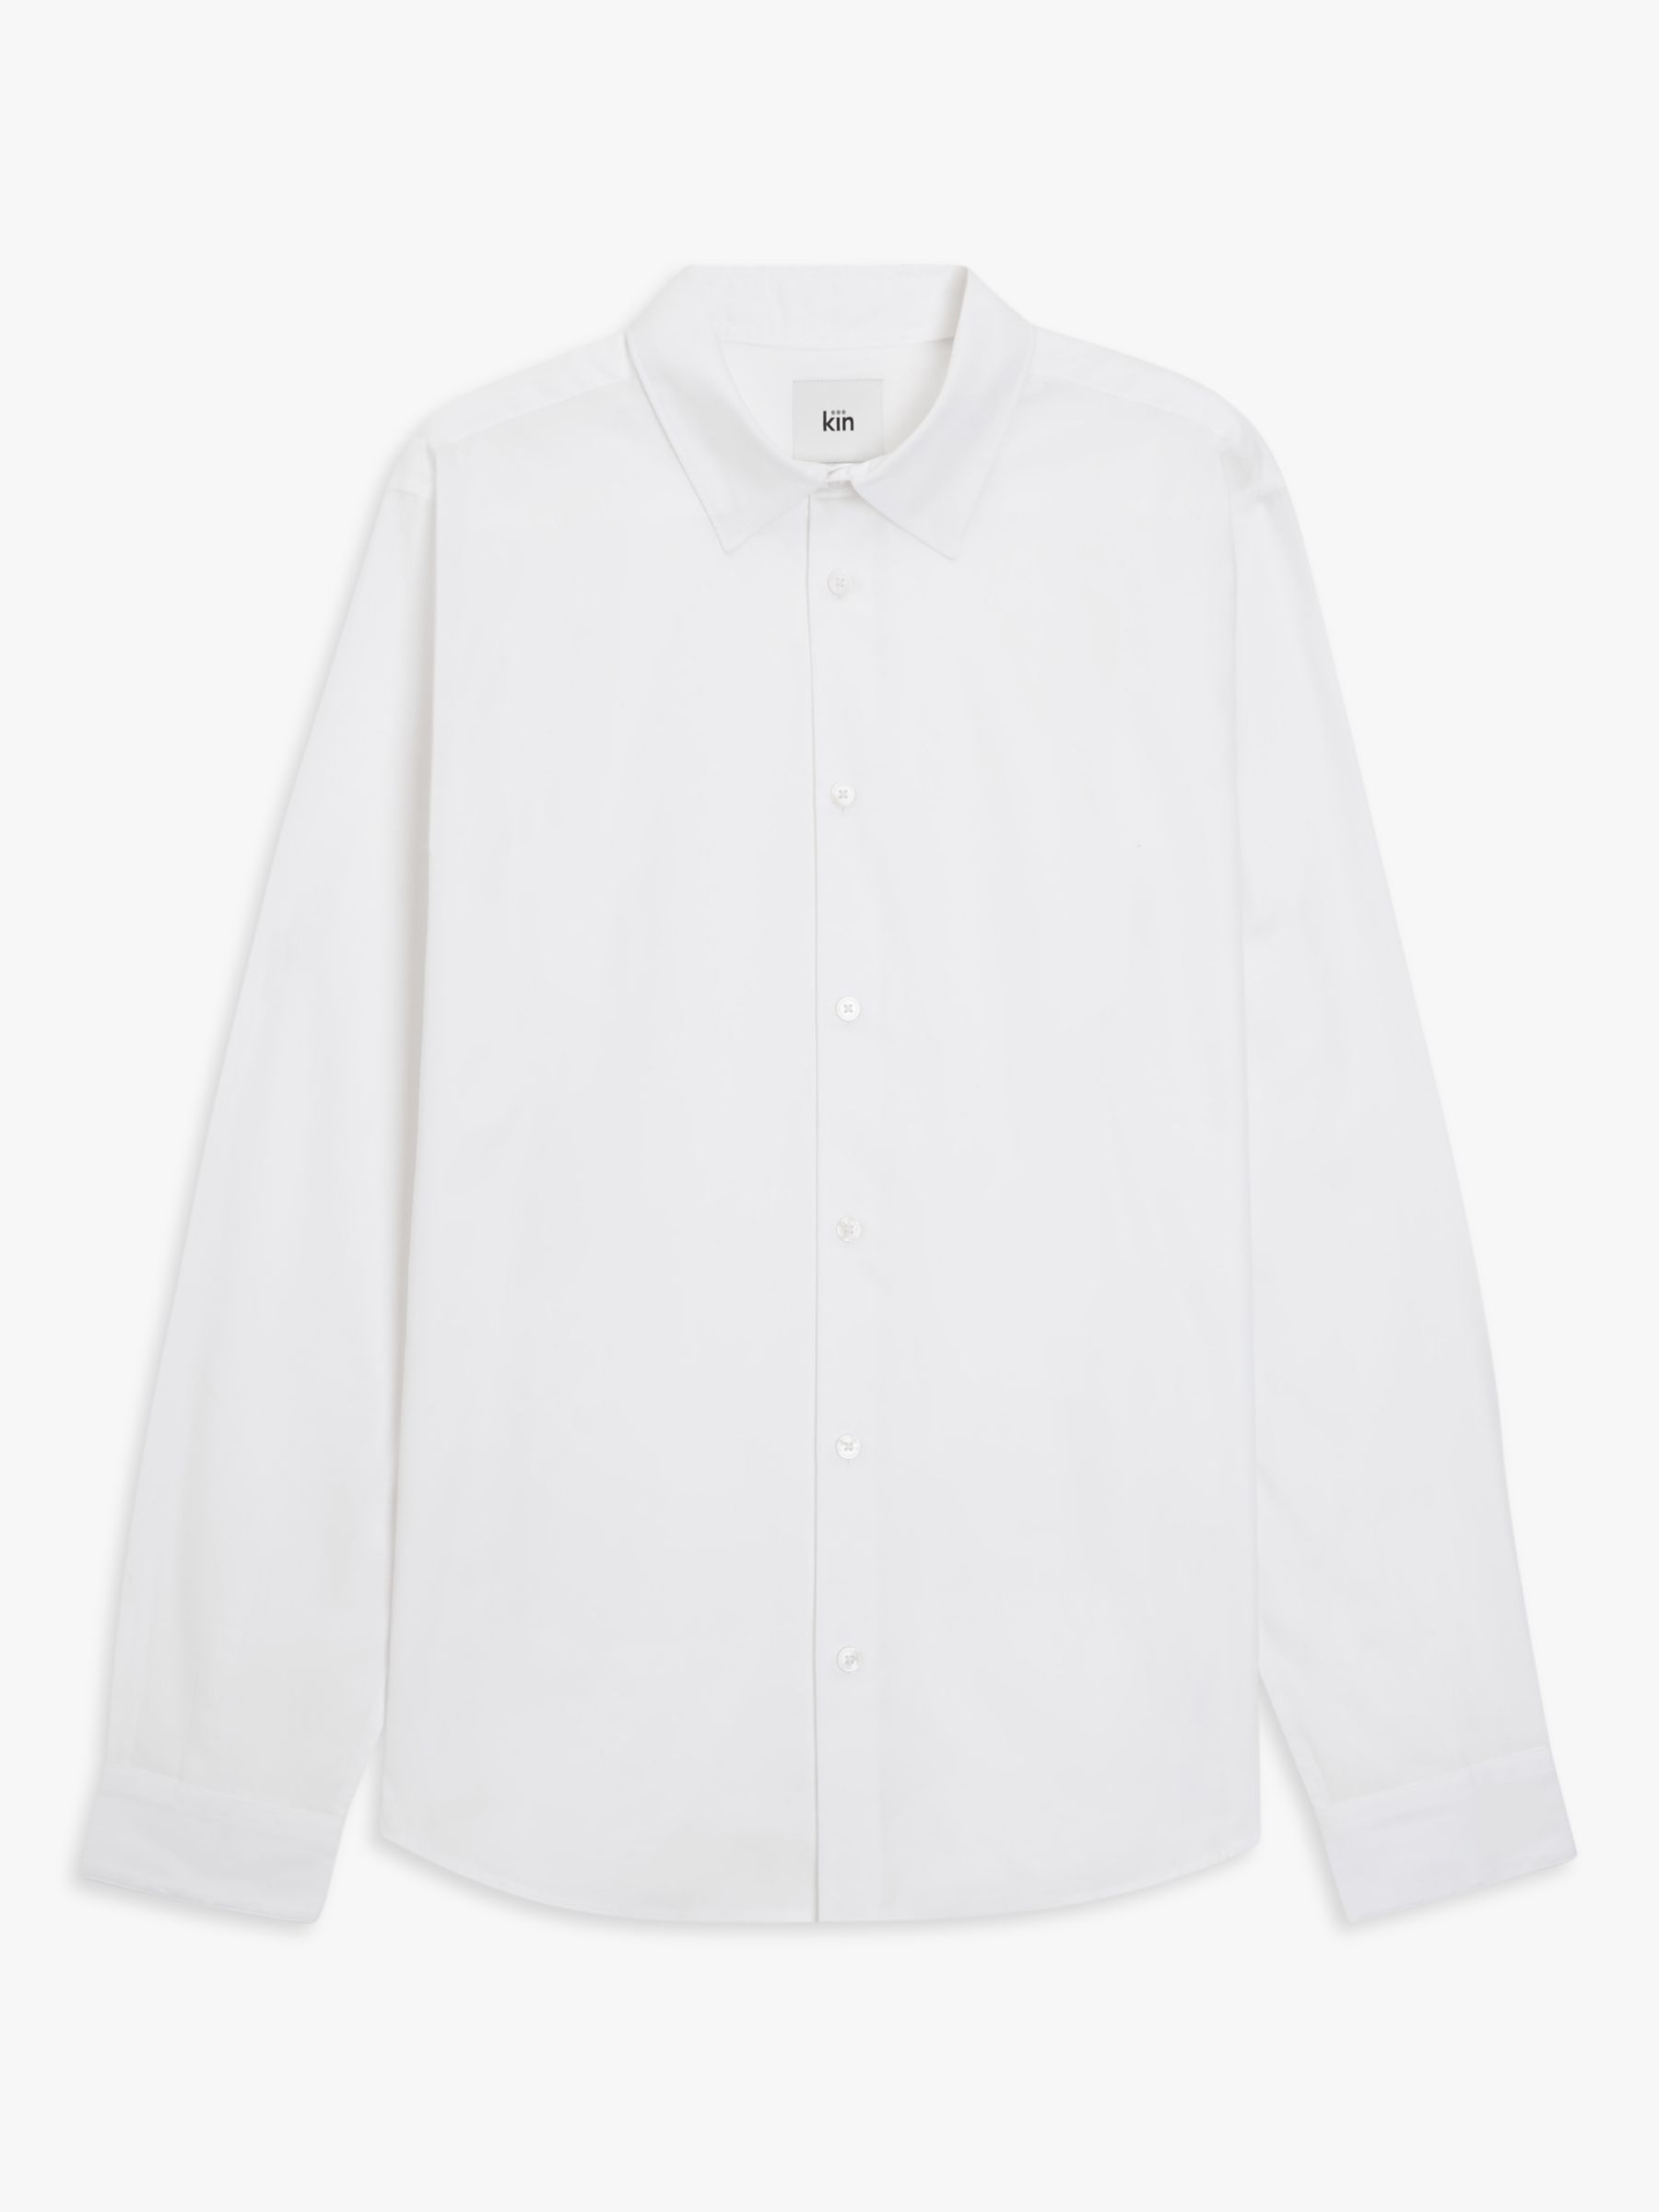 Kin Cotton Poplin Shirt, Bright White, M